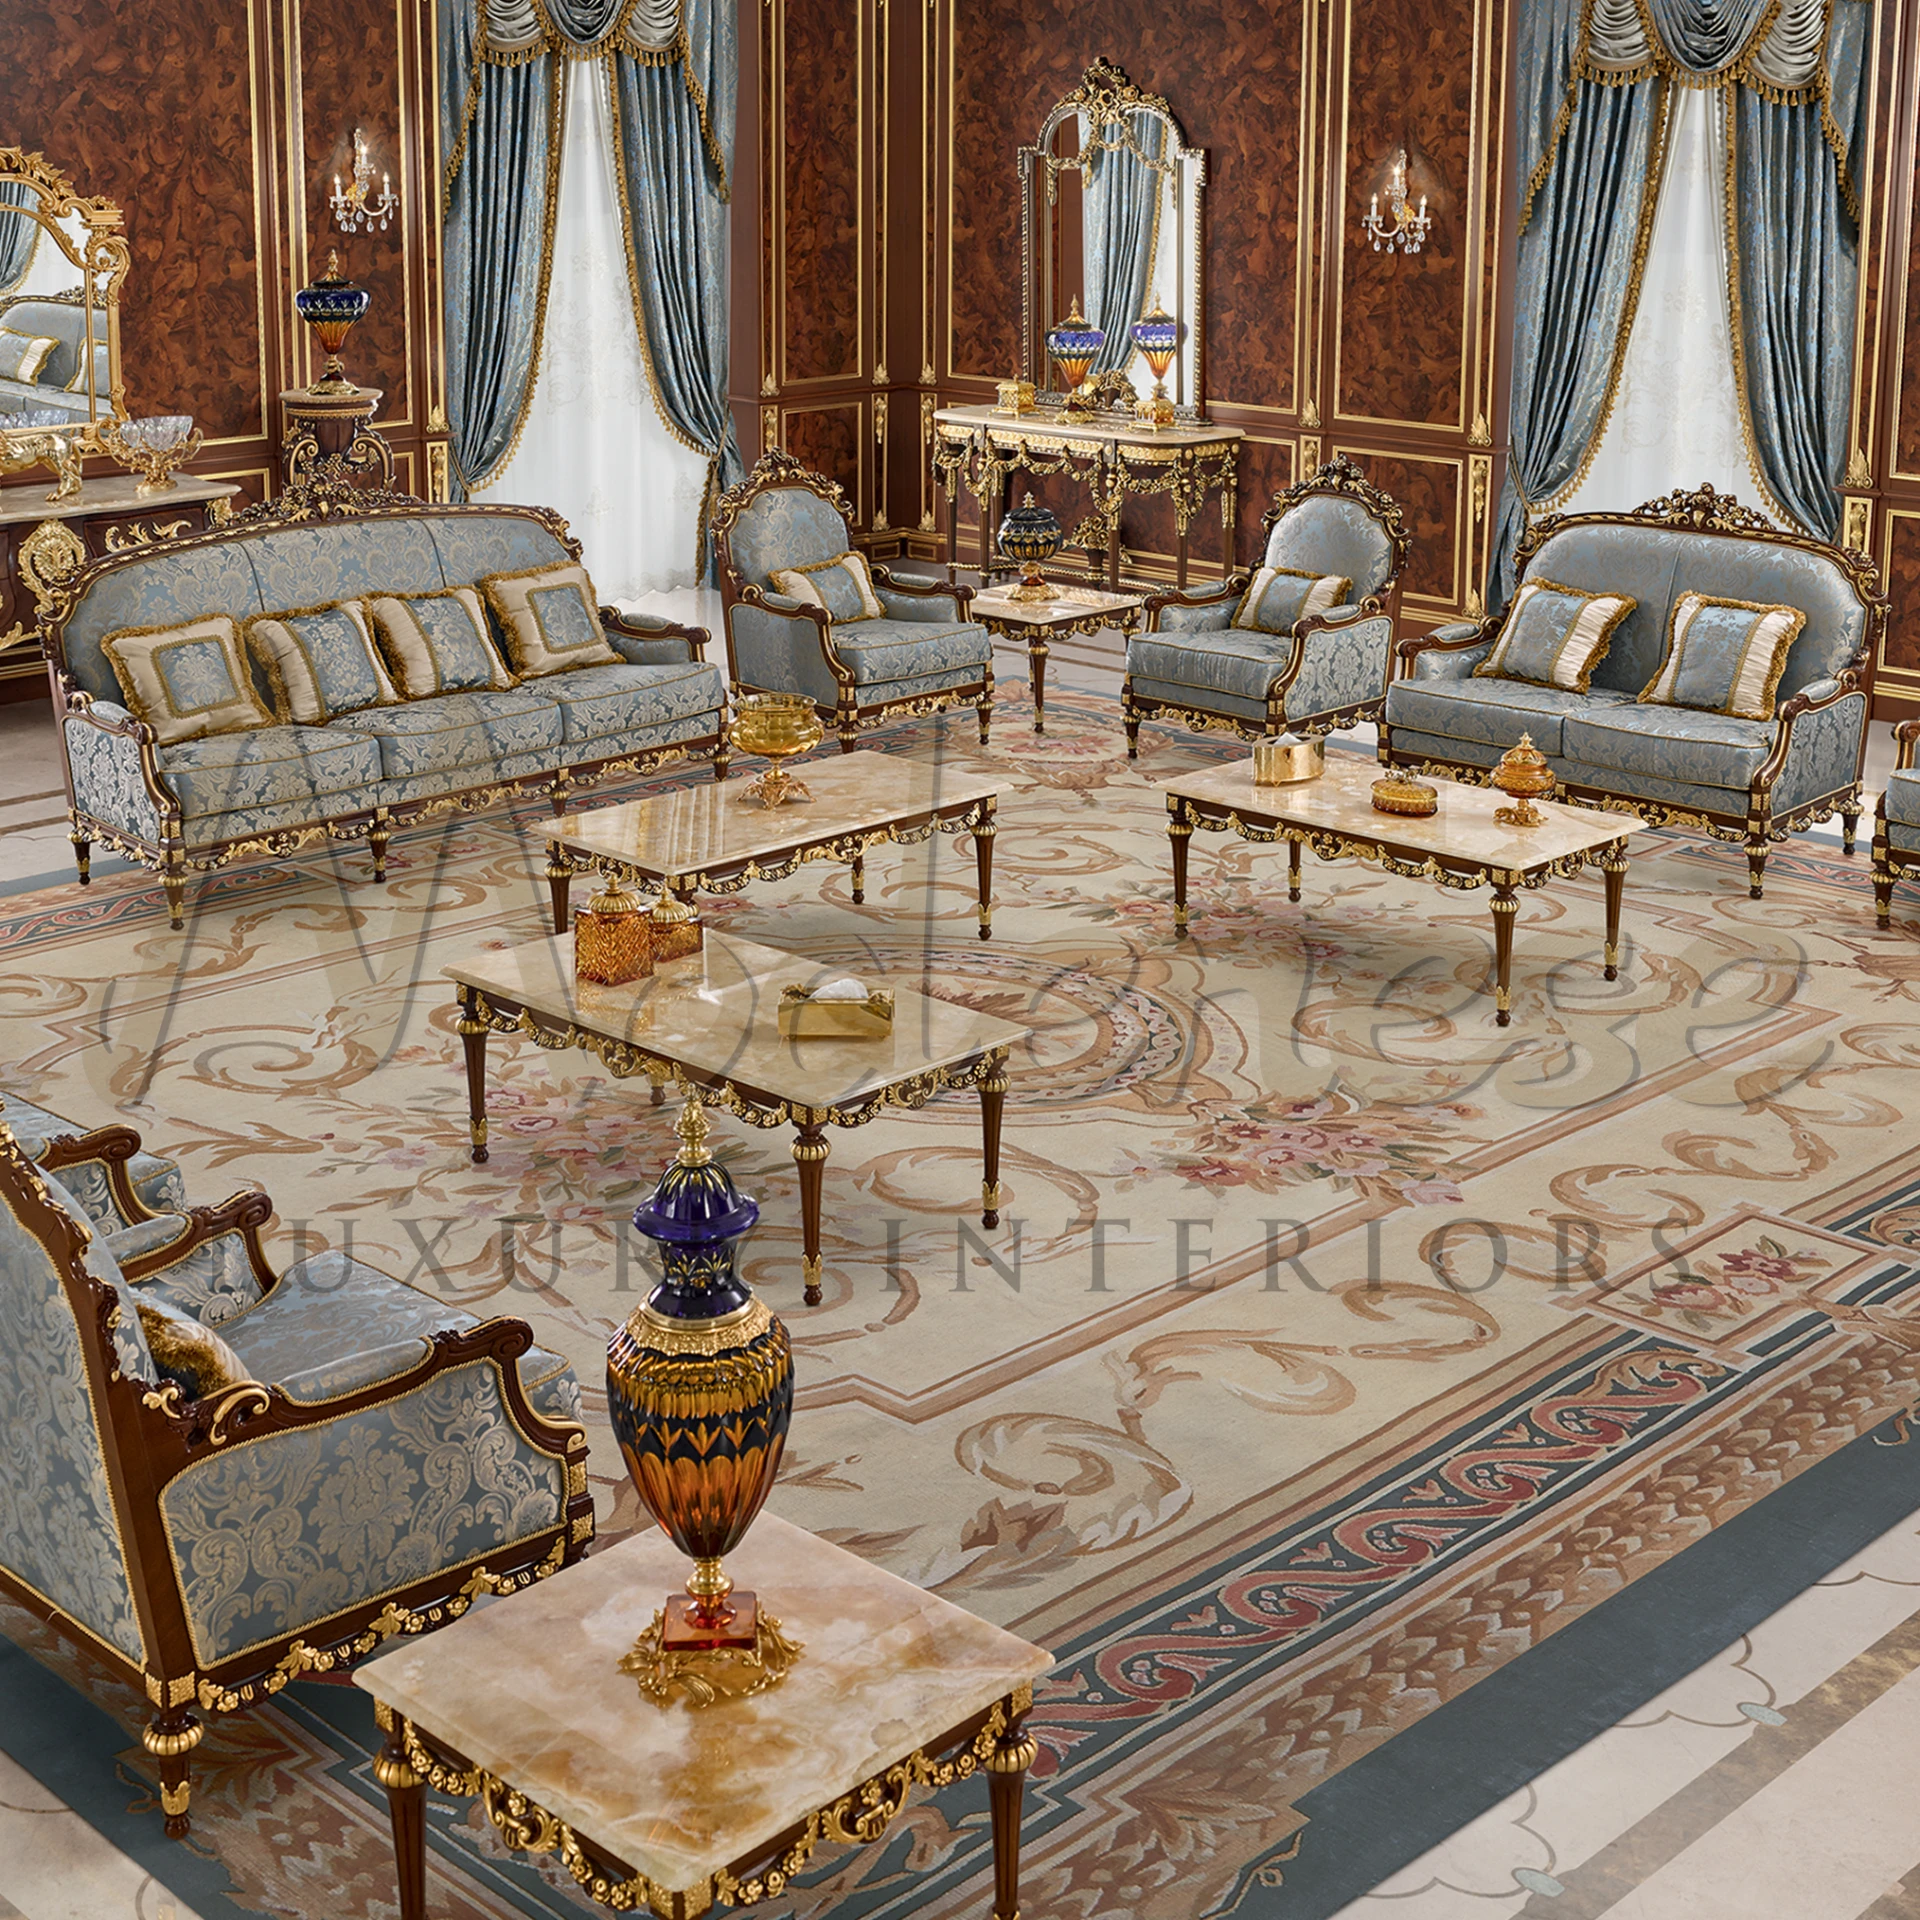 Classic rectangular coffee table for luxury interior decor.